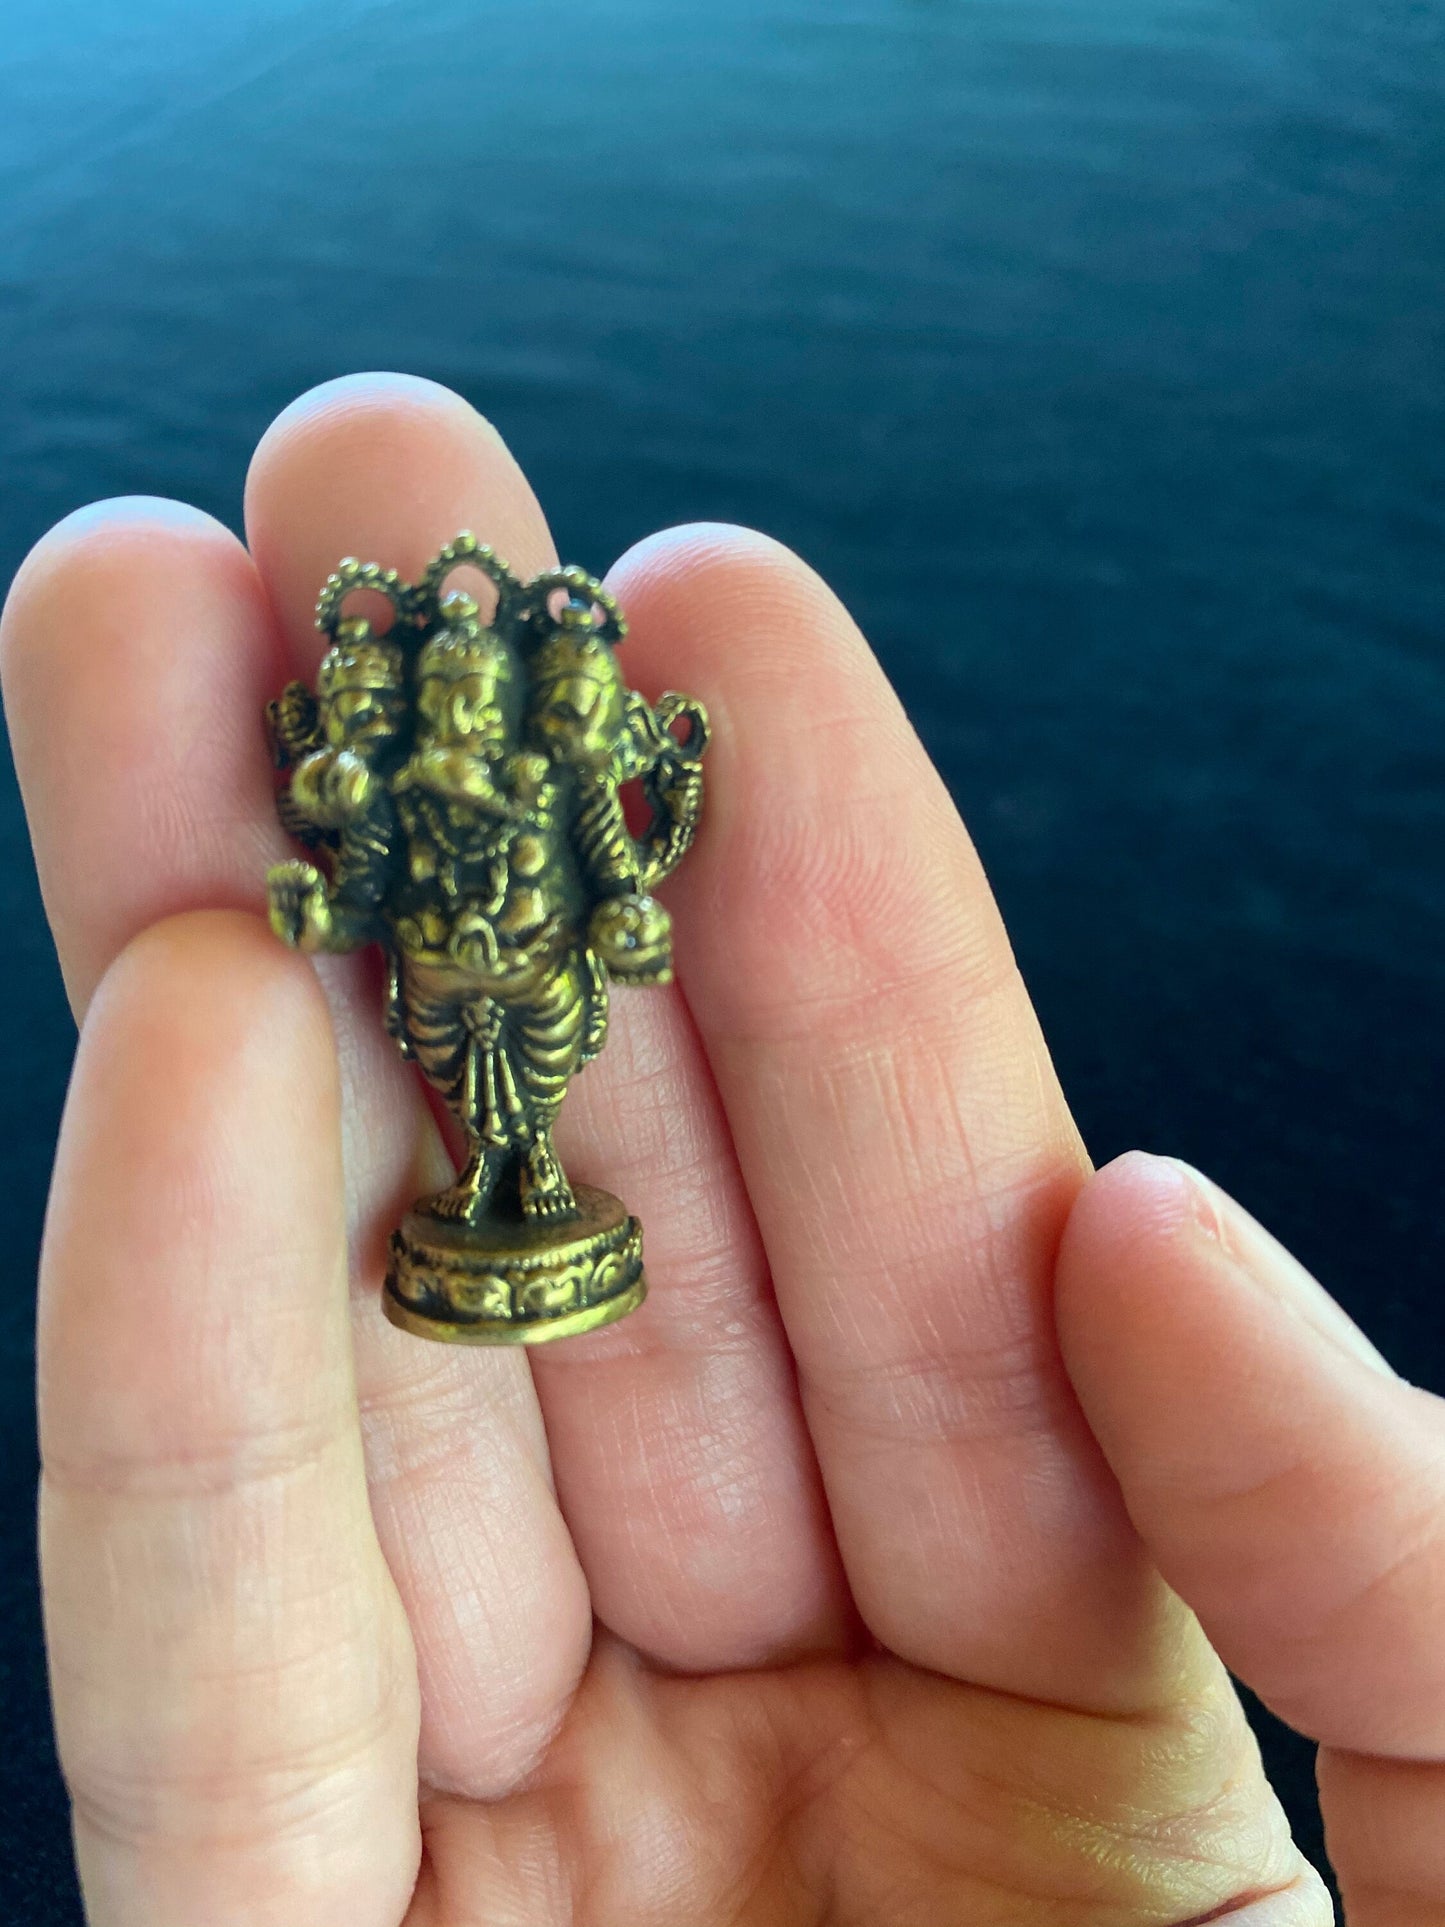 Tiny Brass Three Headed Ganesha Statue | Handmade | 1.50 inches by 1 inches | Trimuhkti Ganapati | Ganesh